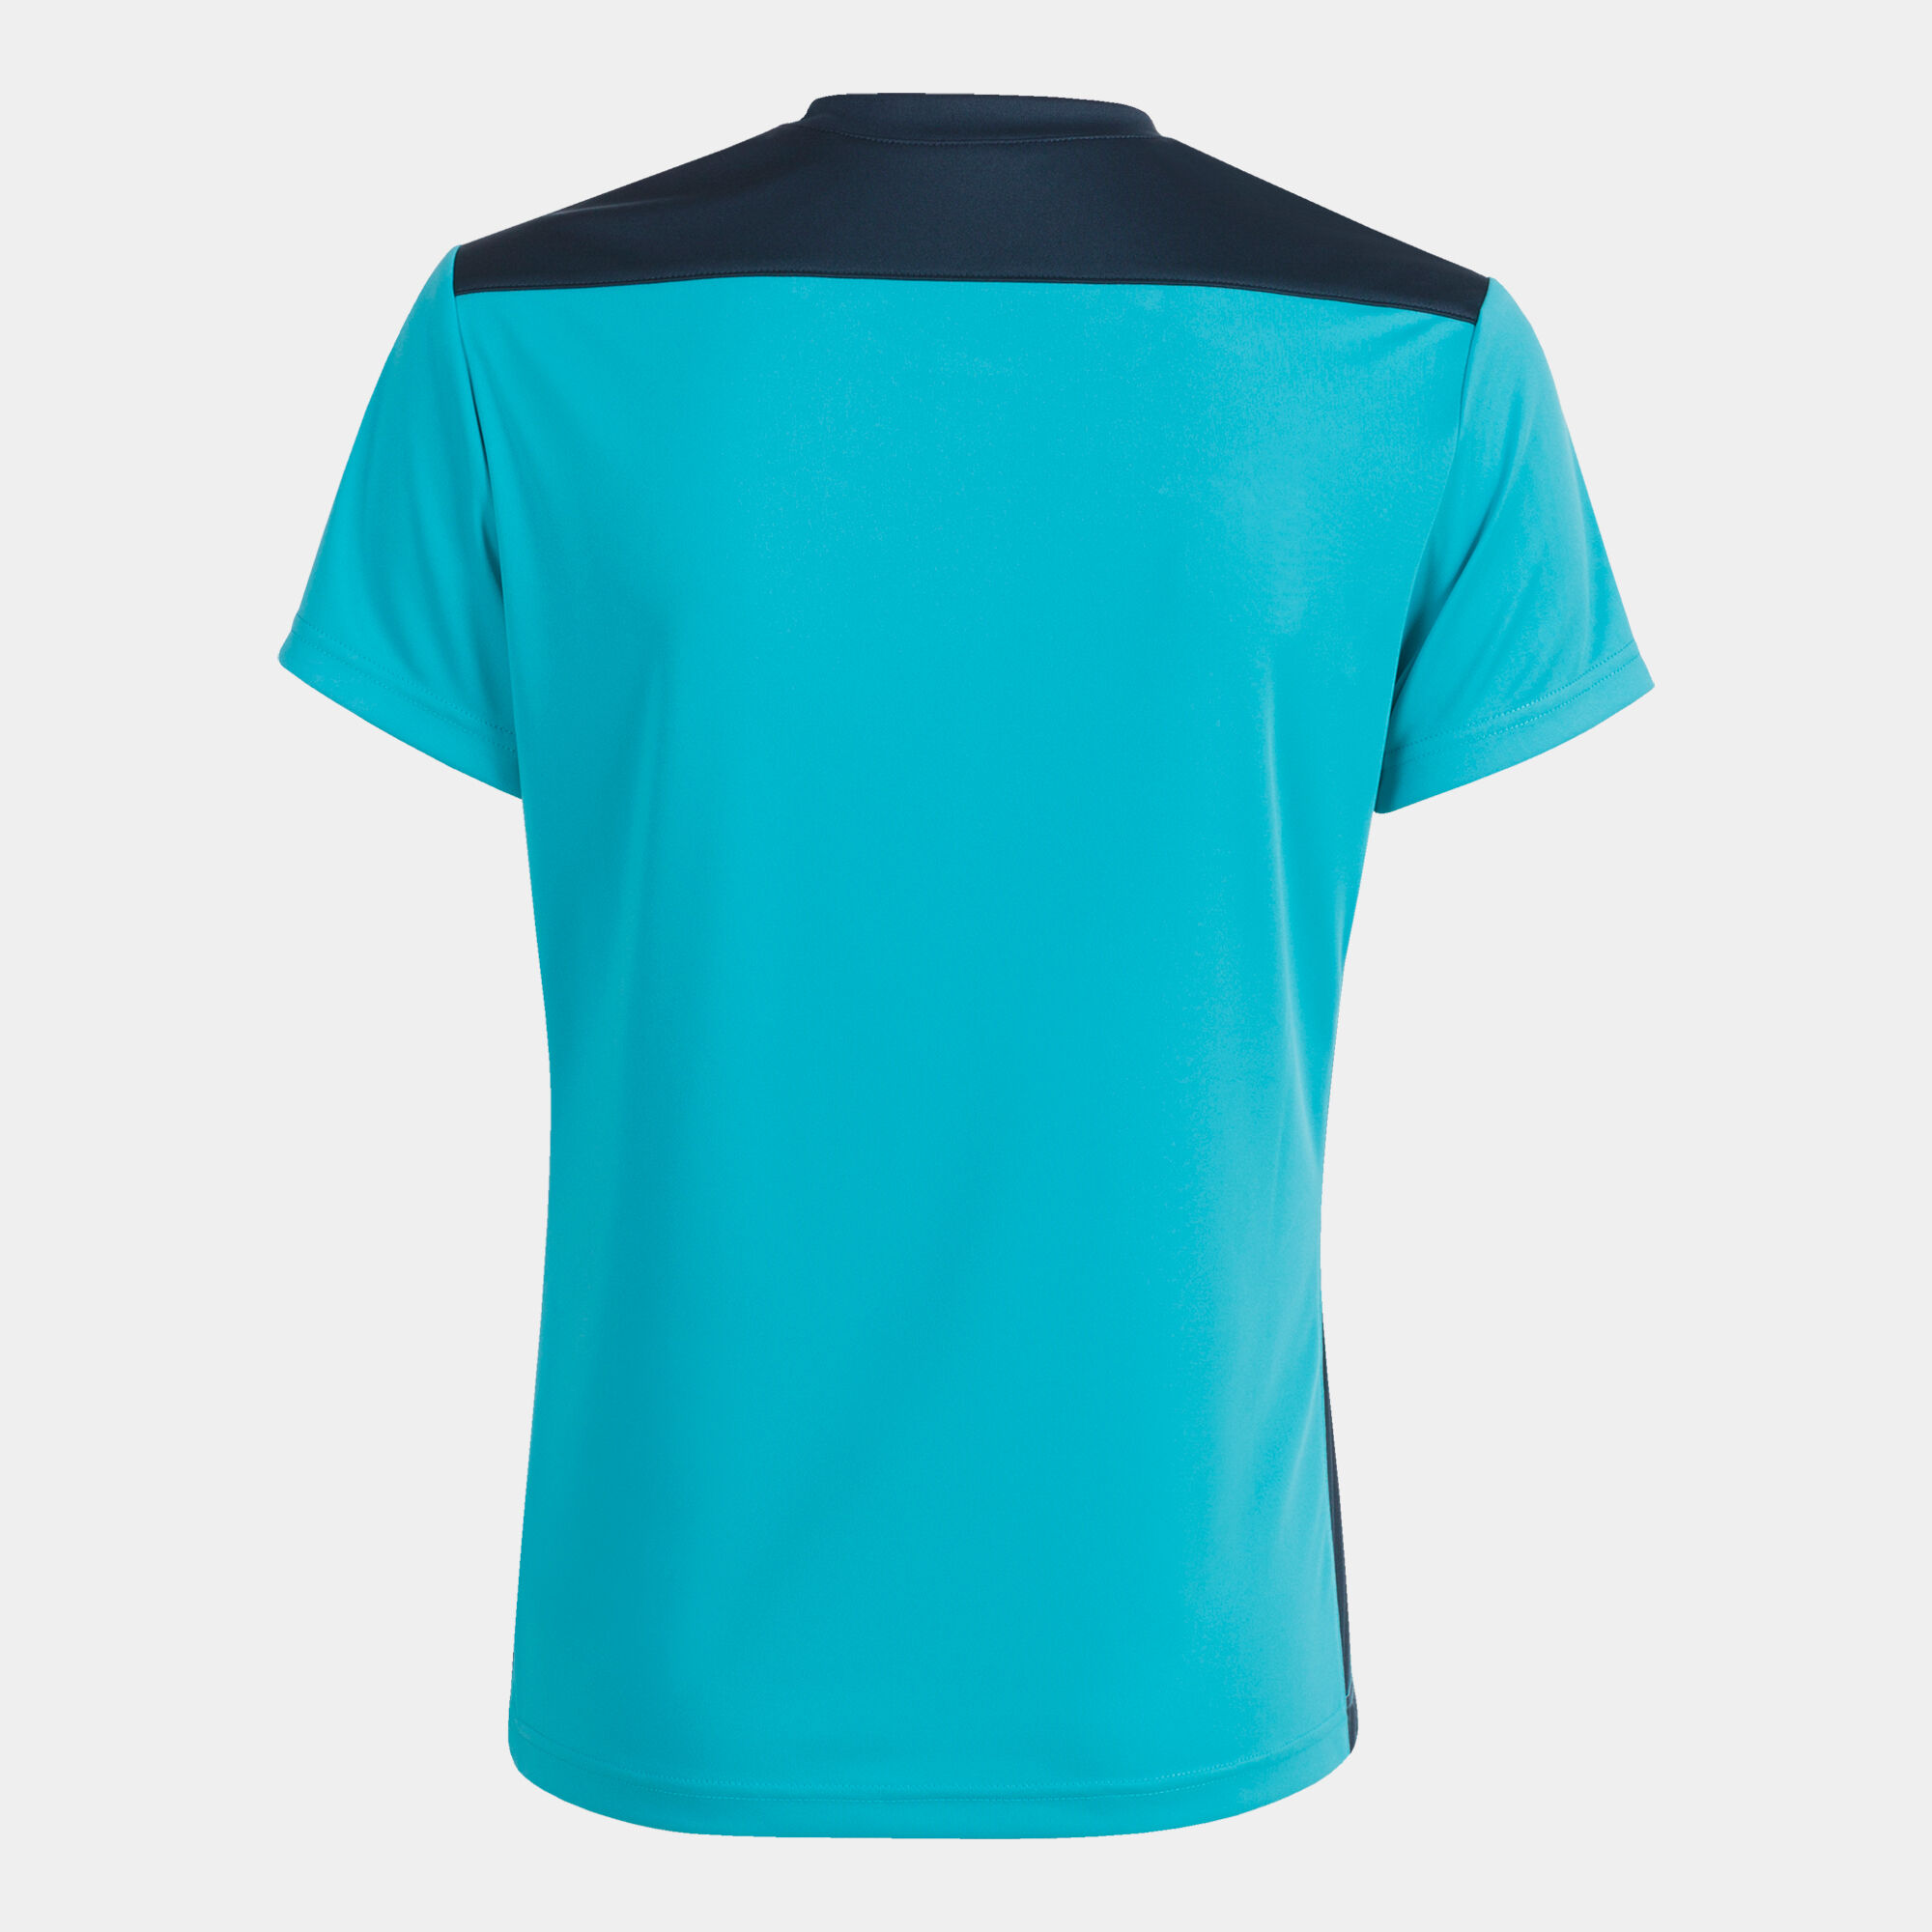 Shirt short sleeve woman Championship VI fluorescent turquoise navy blue